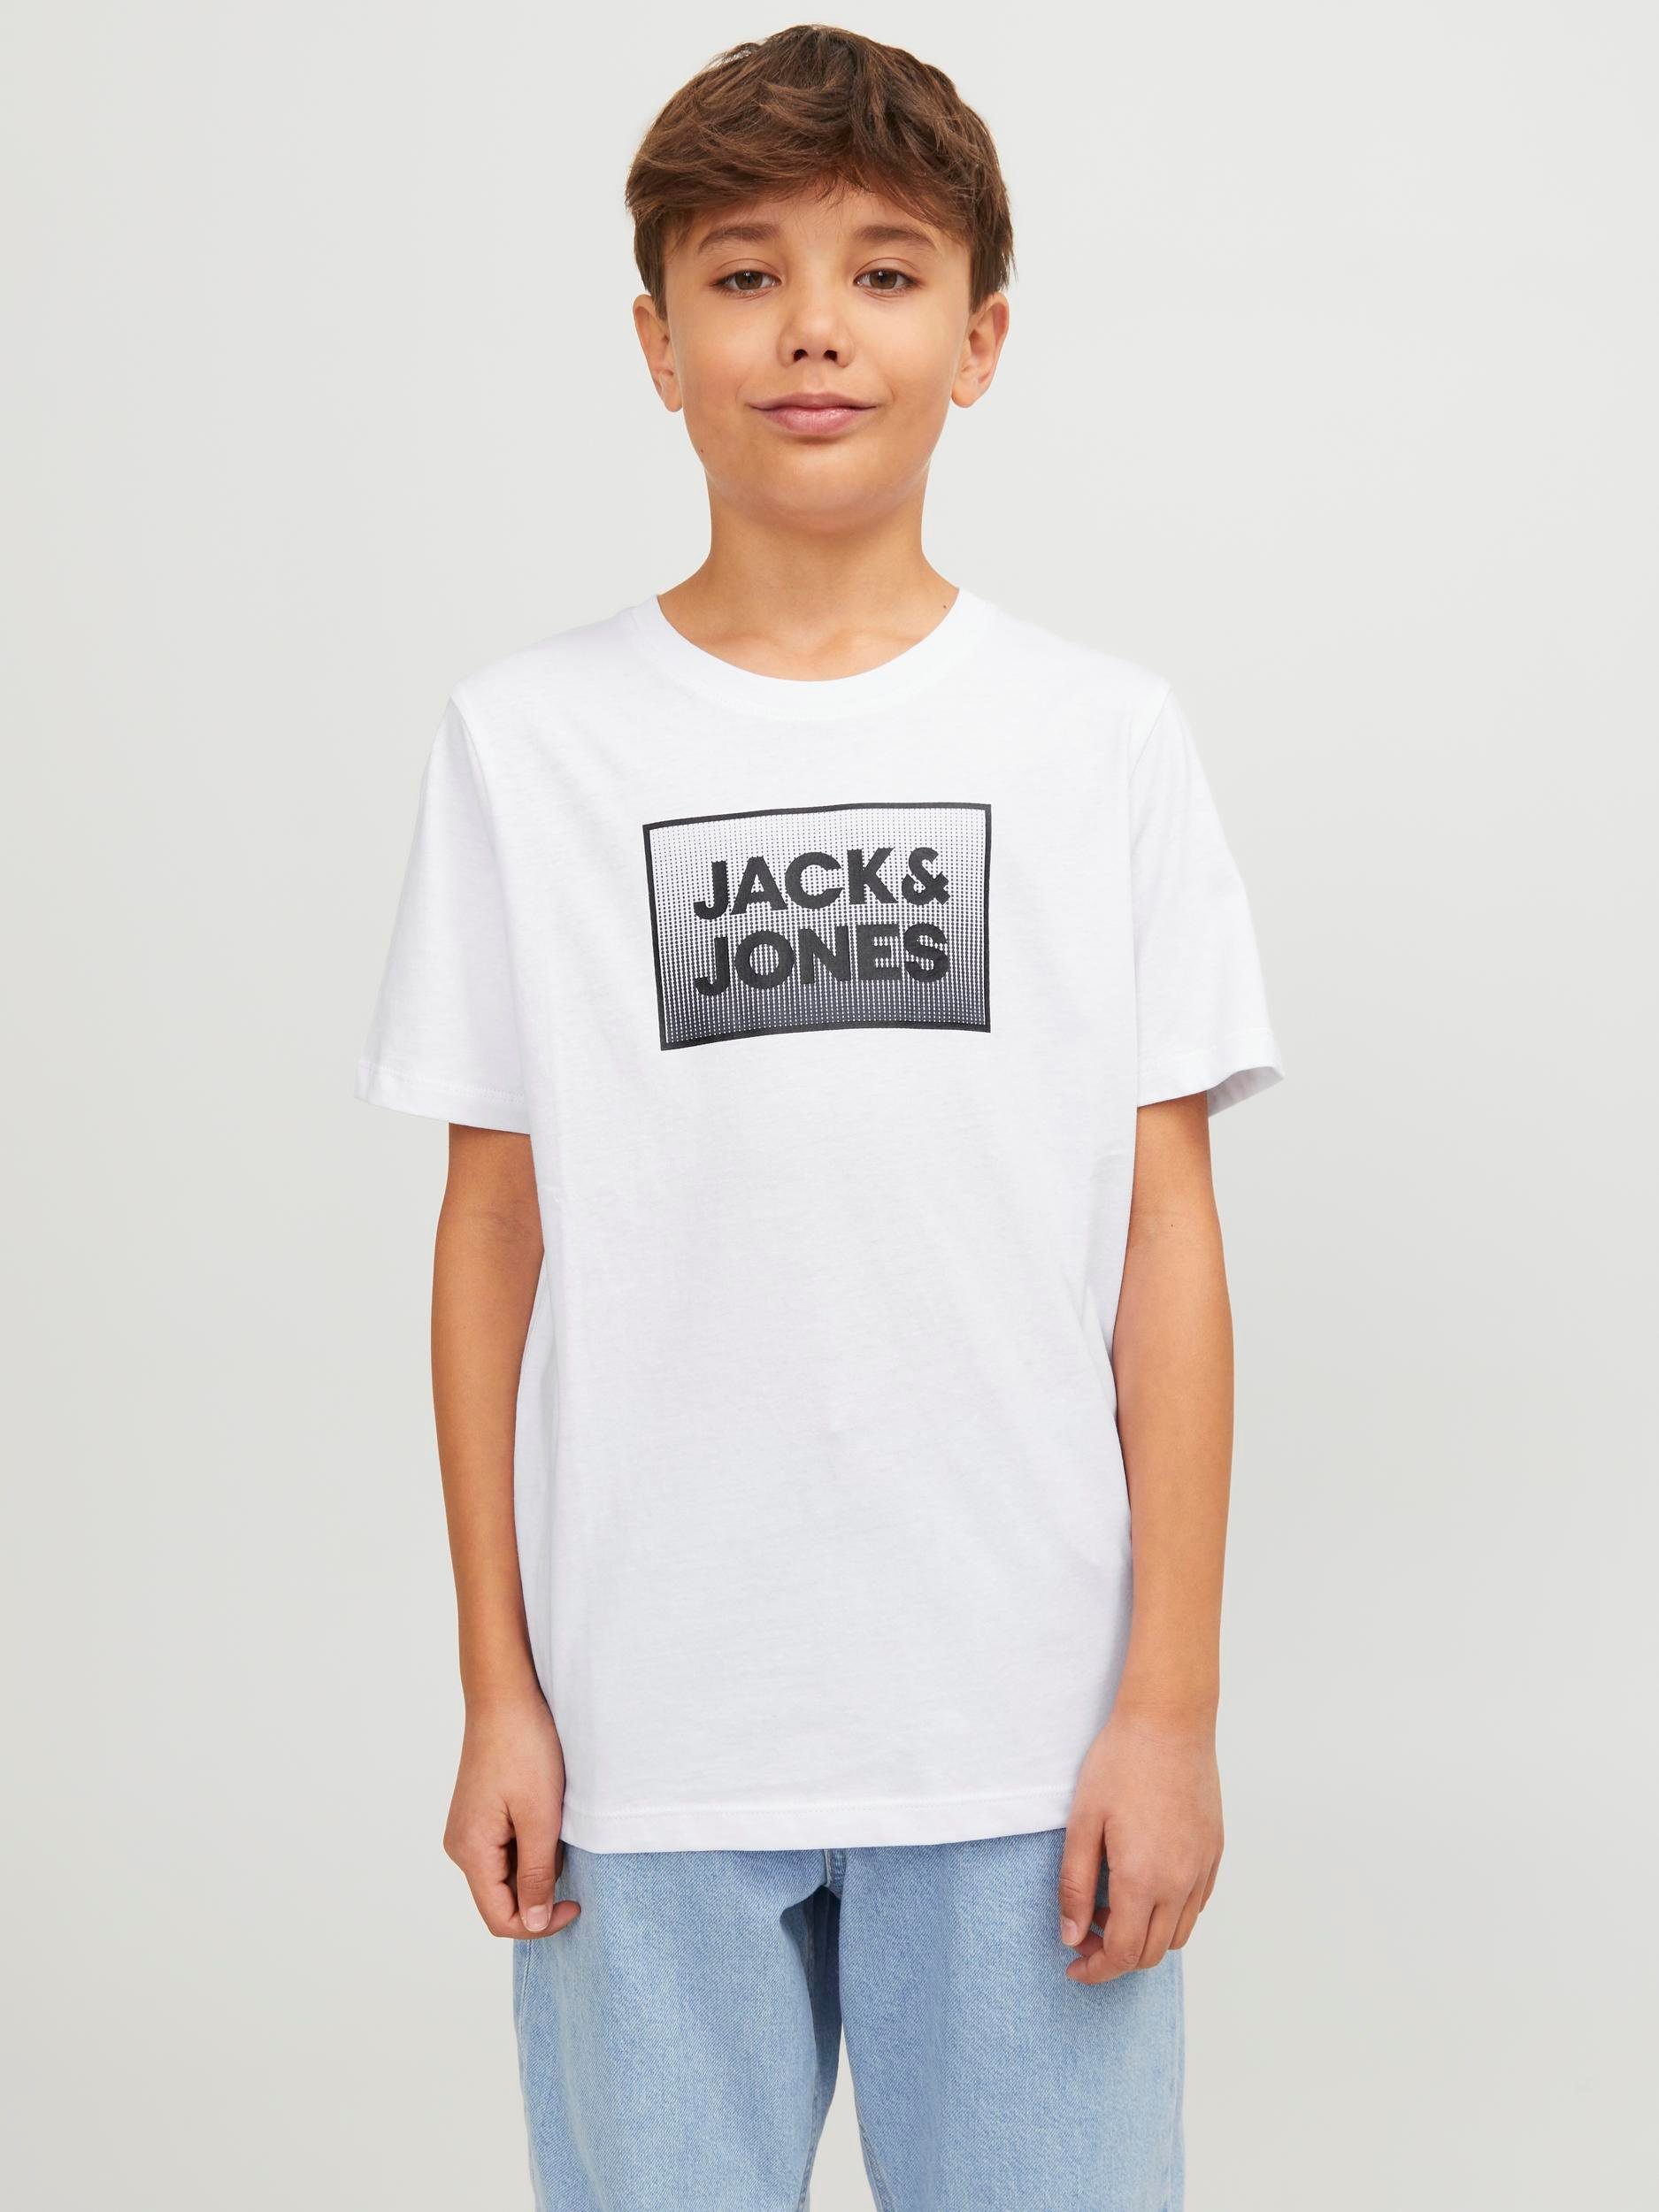 Jack & Jones Junior SS JNR TEE white Kurzarmshirt JJSTEEL